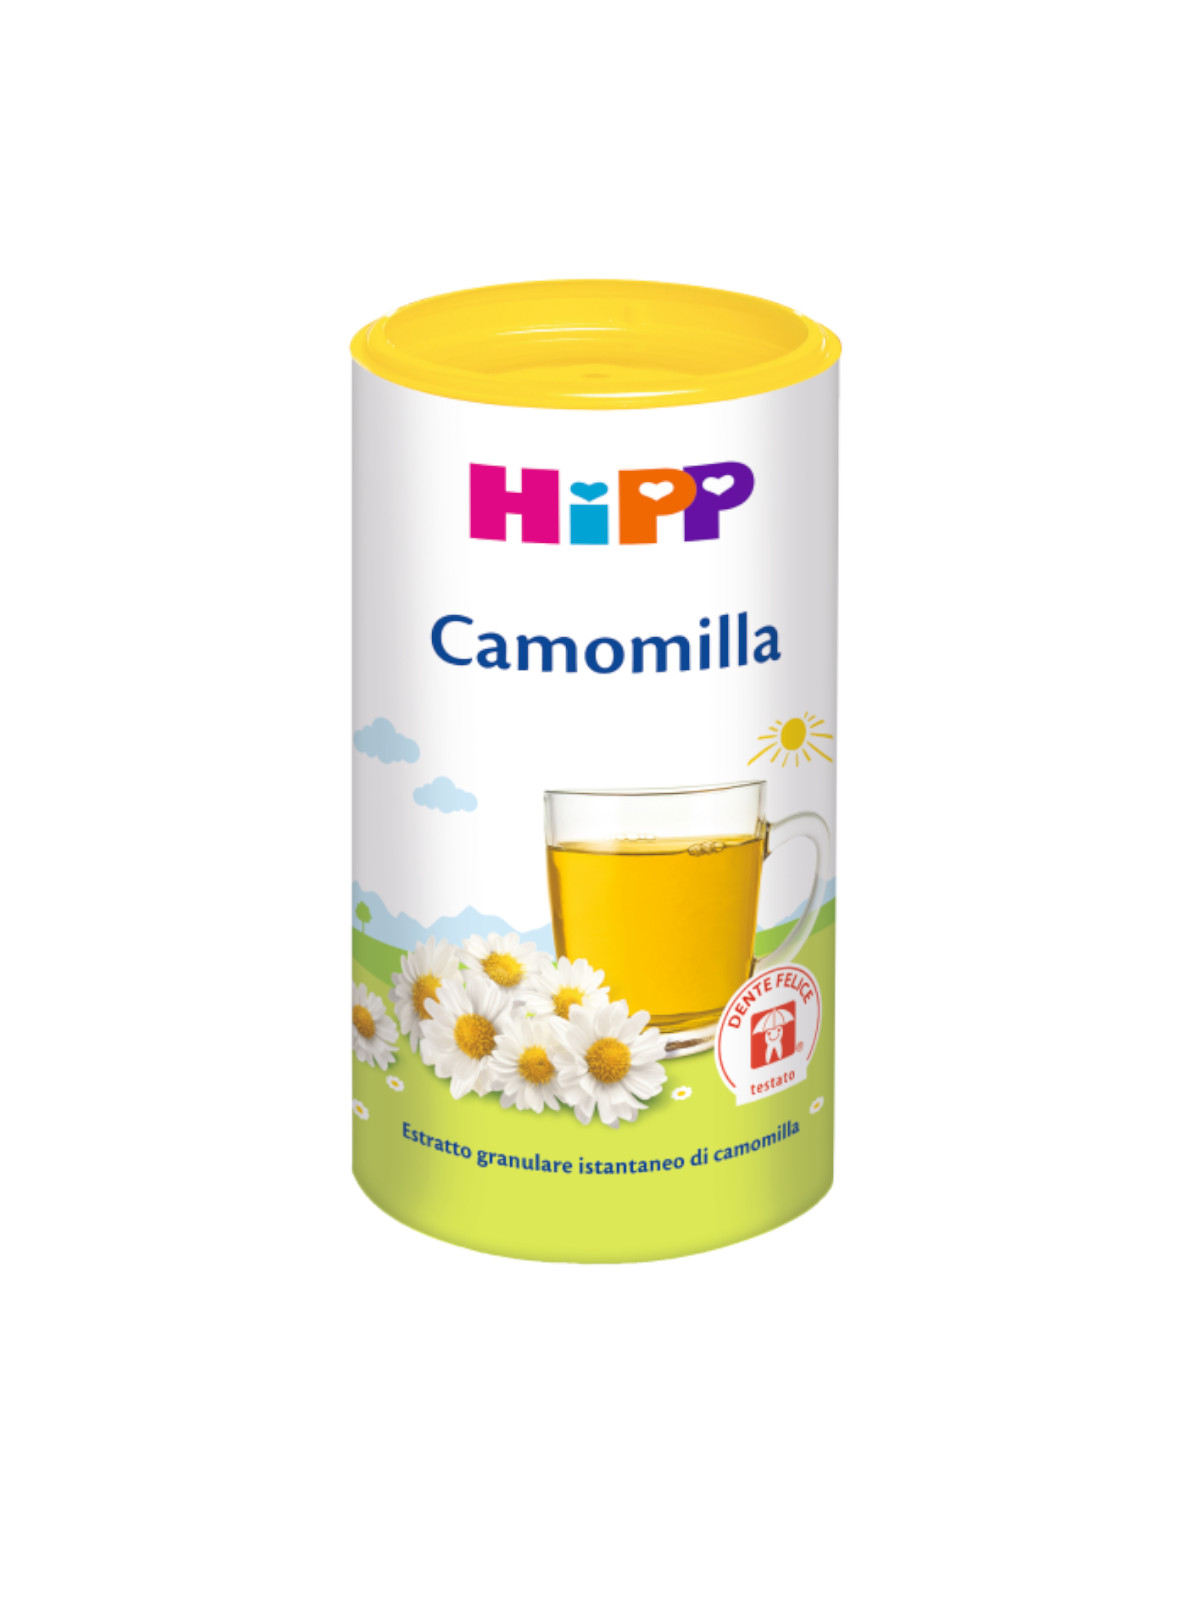 Chá de camomila isomaltulose 200g - Hipp